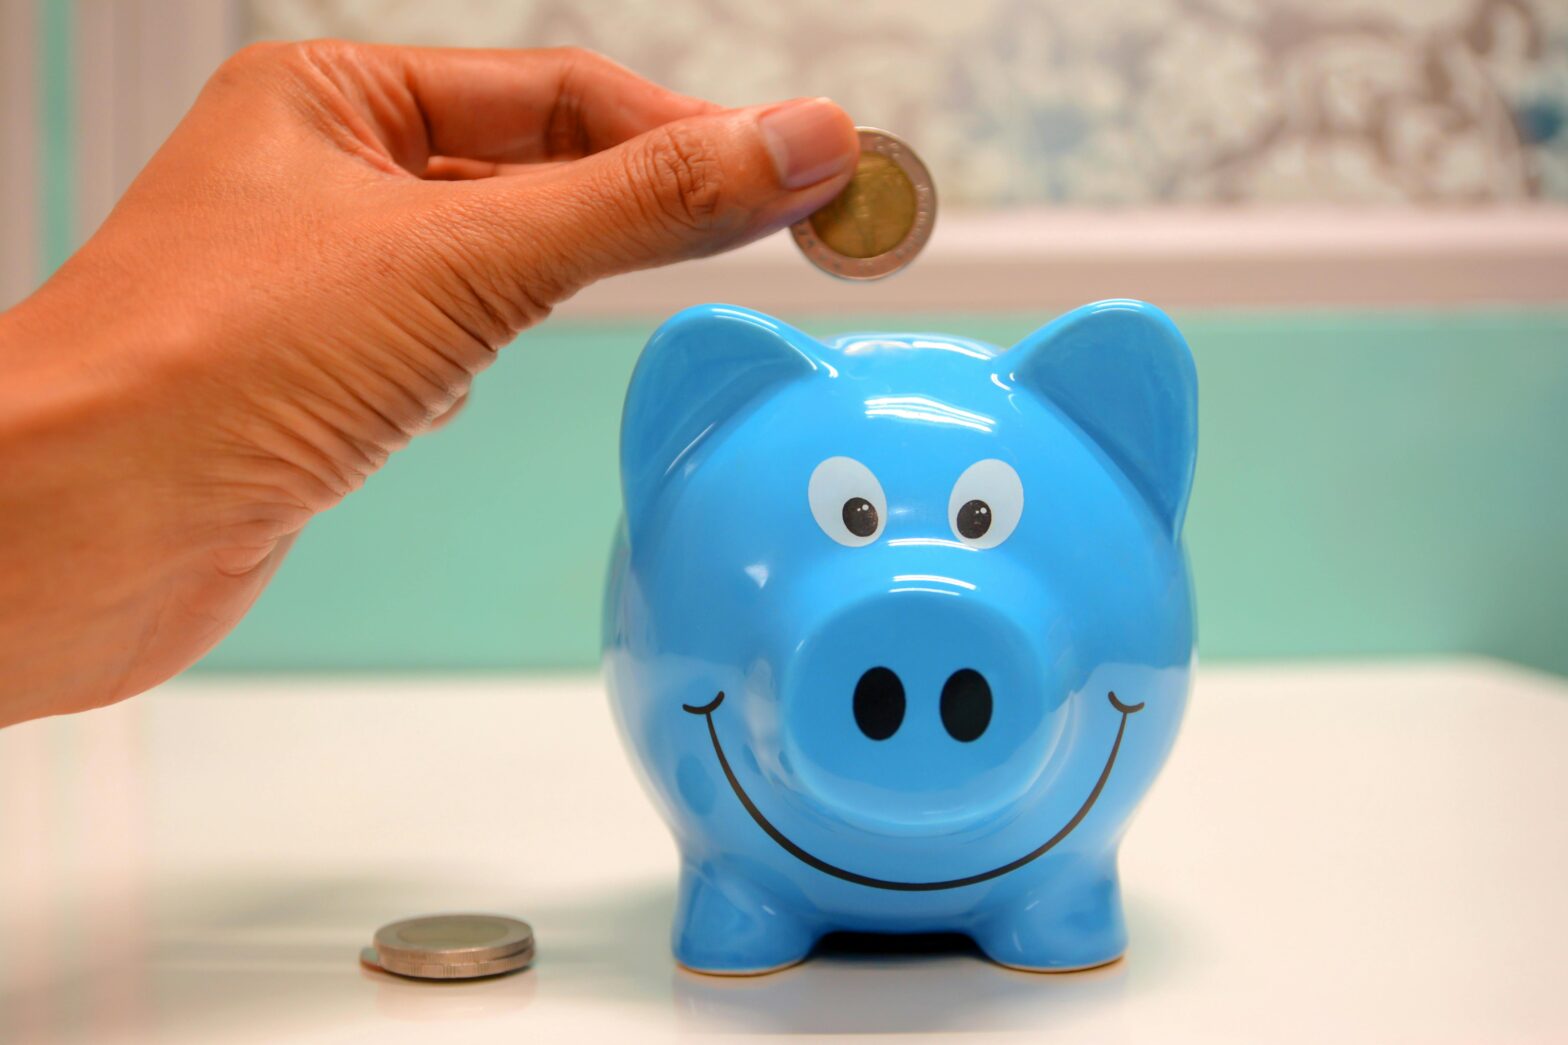 Hand putting coins into blue piggy bank.